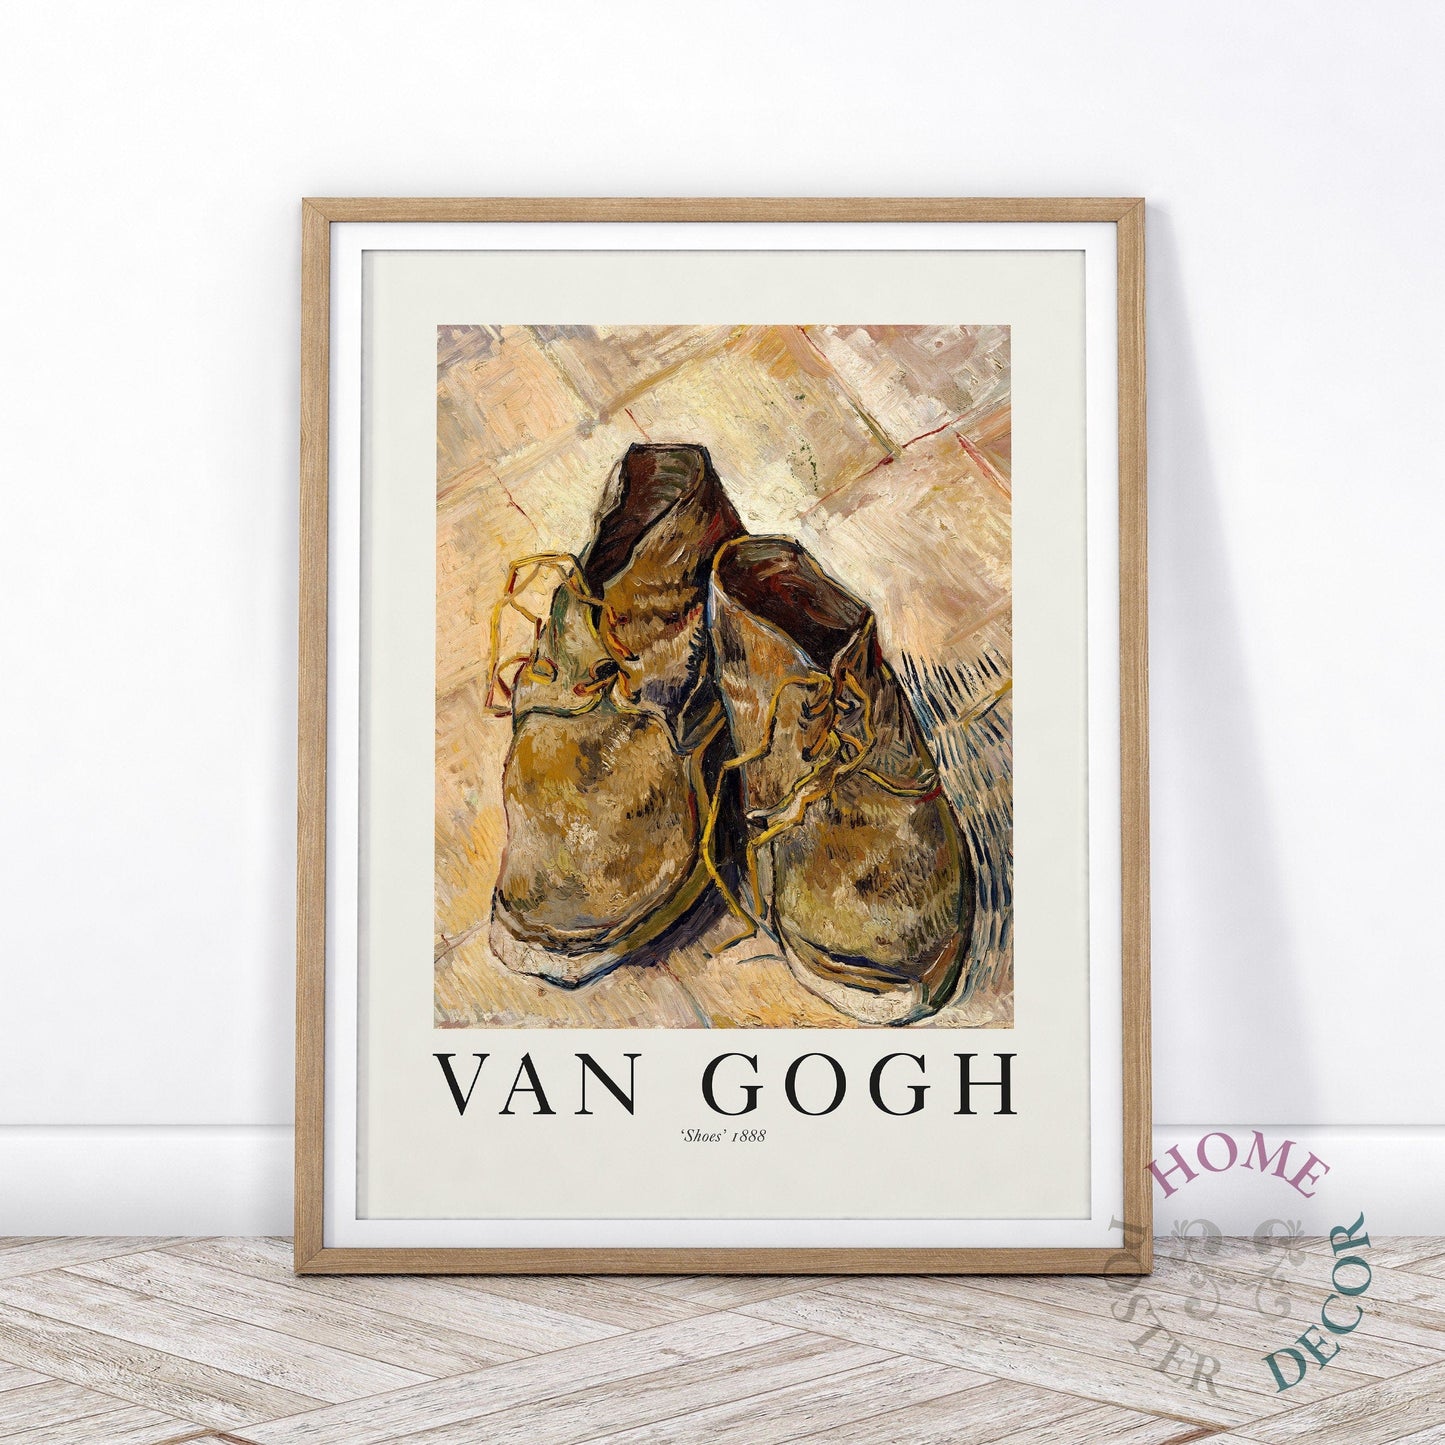 Home Poster Decor Van Gogh Print, Van Gogh Shoes, Van Gogh Painting, Post-impressionist, HIGH Quality Archival Print